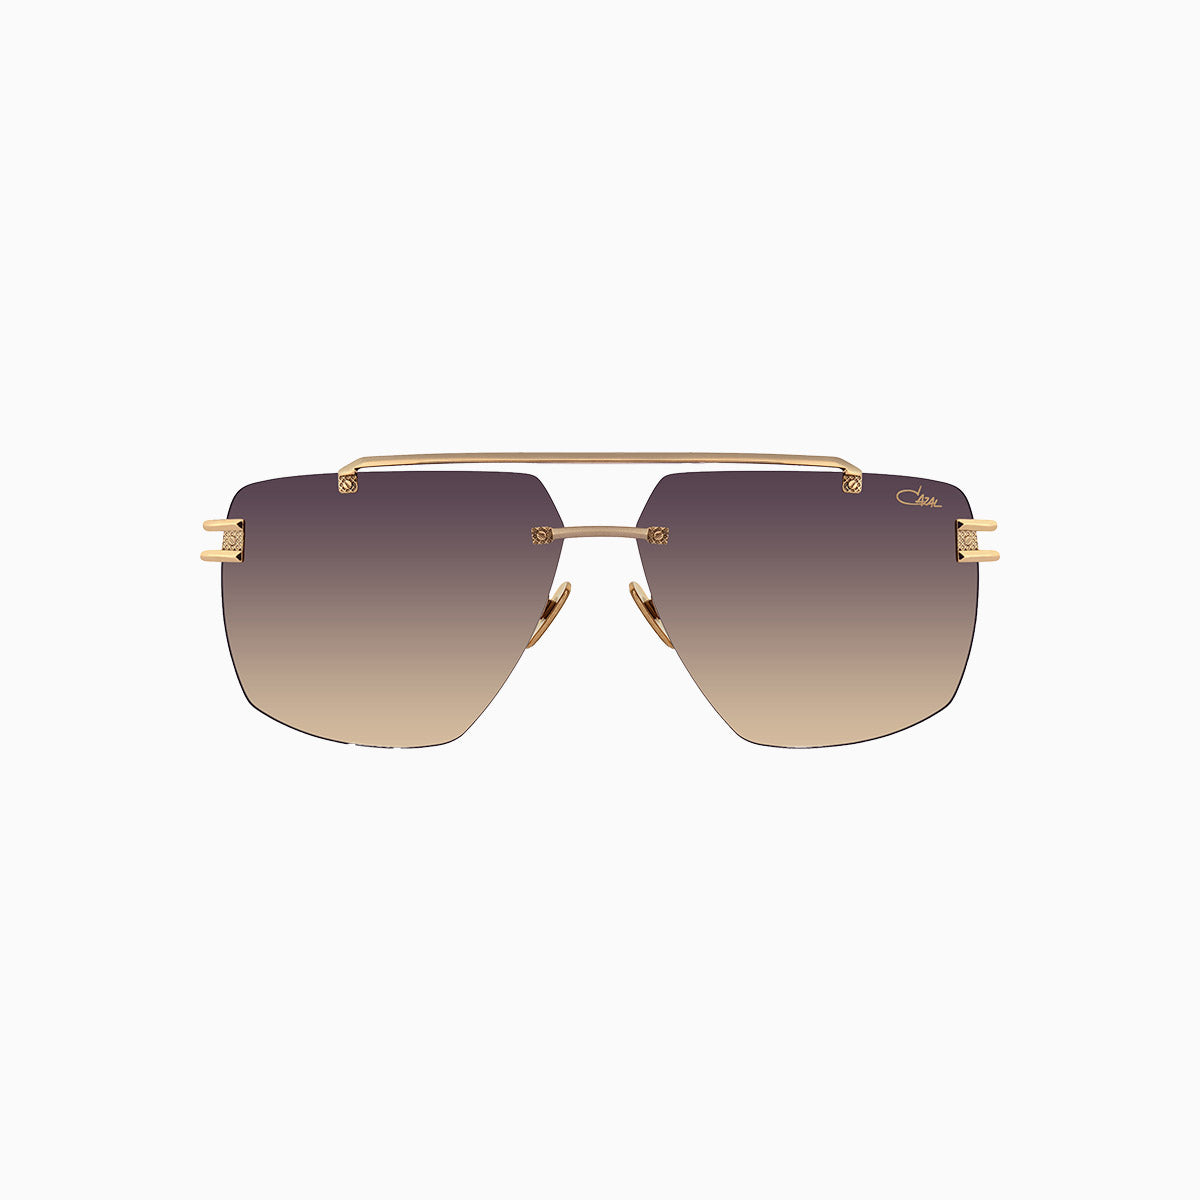 cazel-9107-black-gold-sunglasses-cazal-9107-001